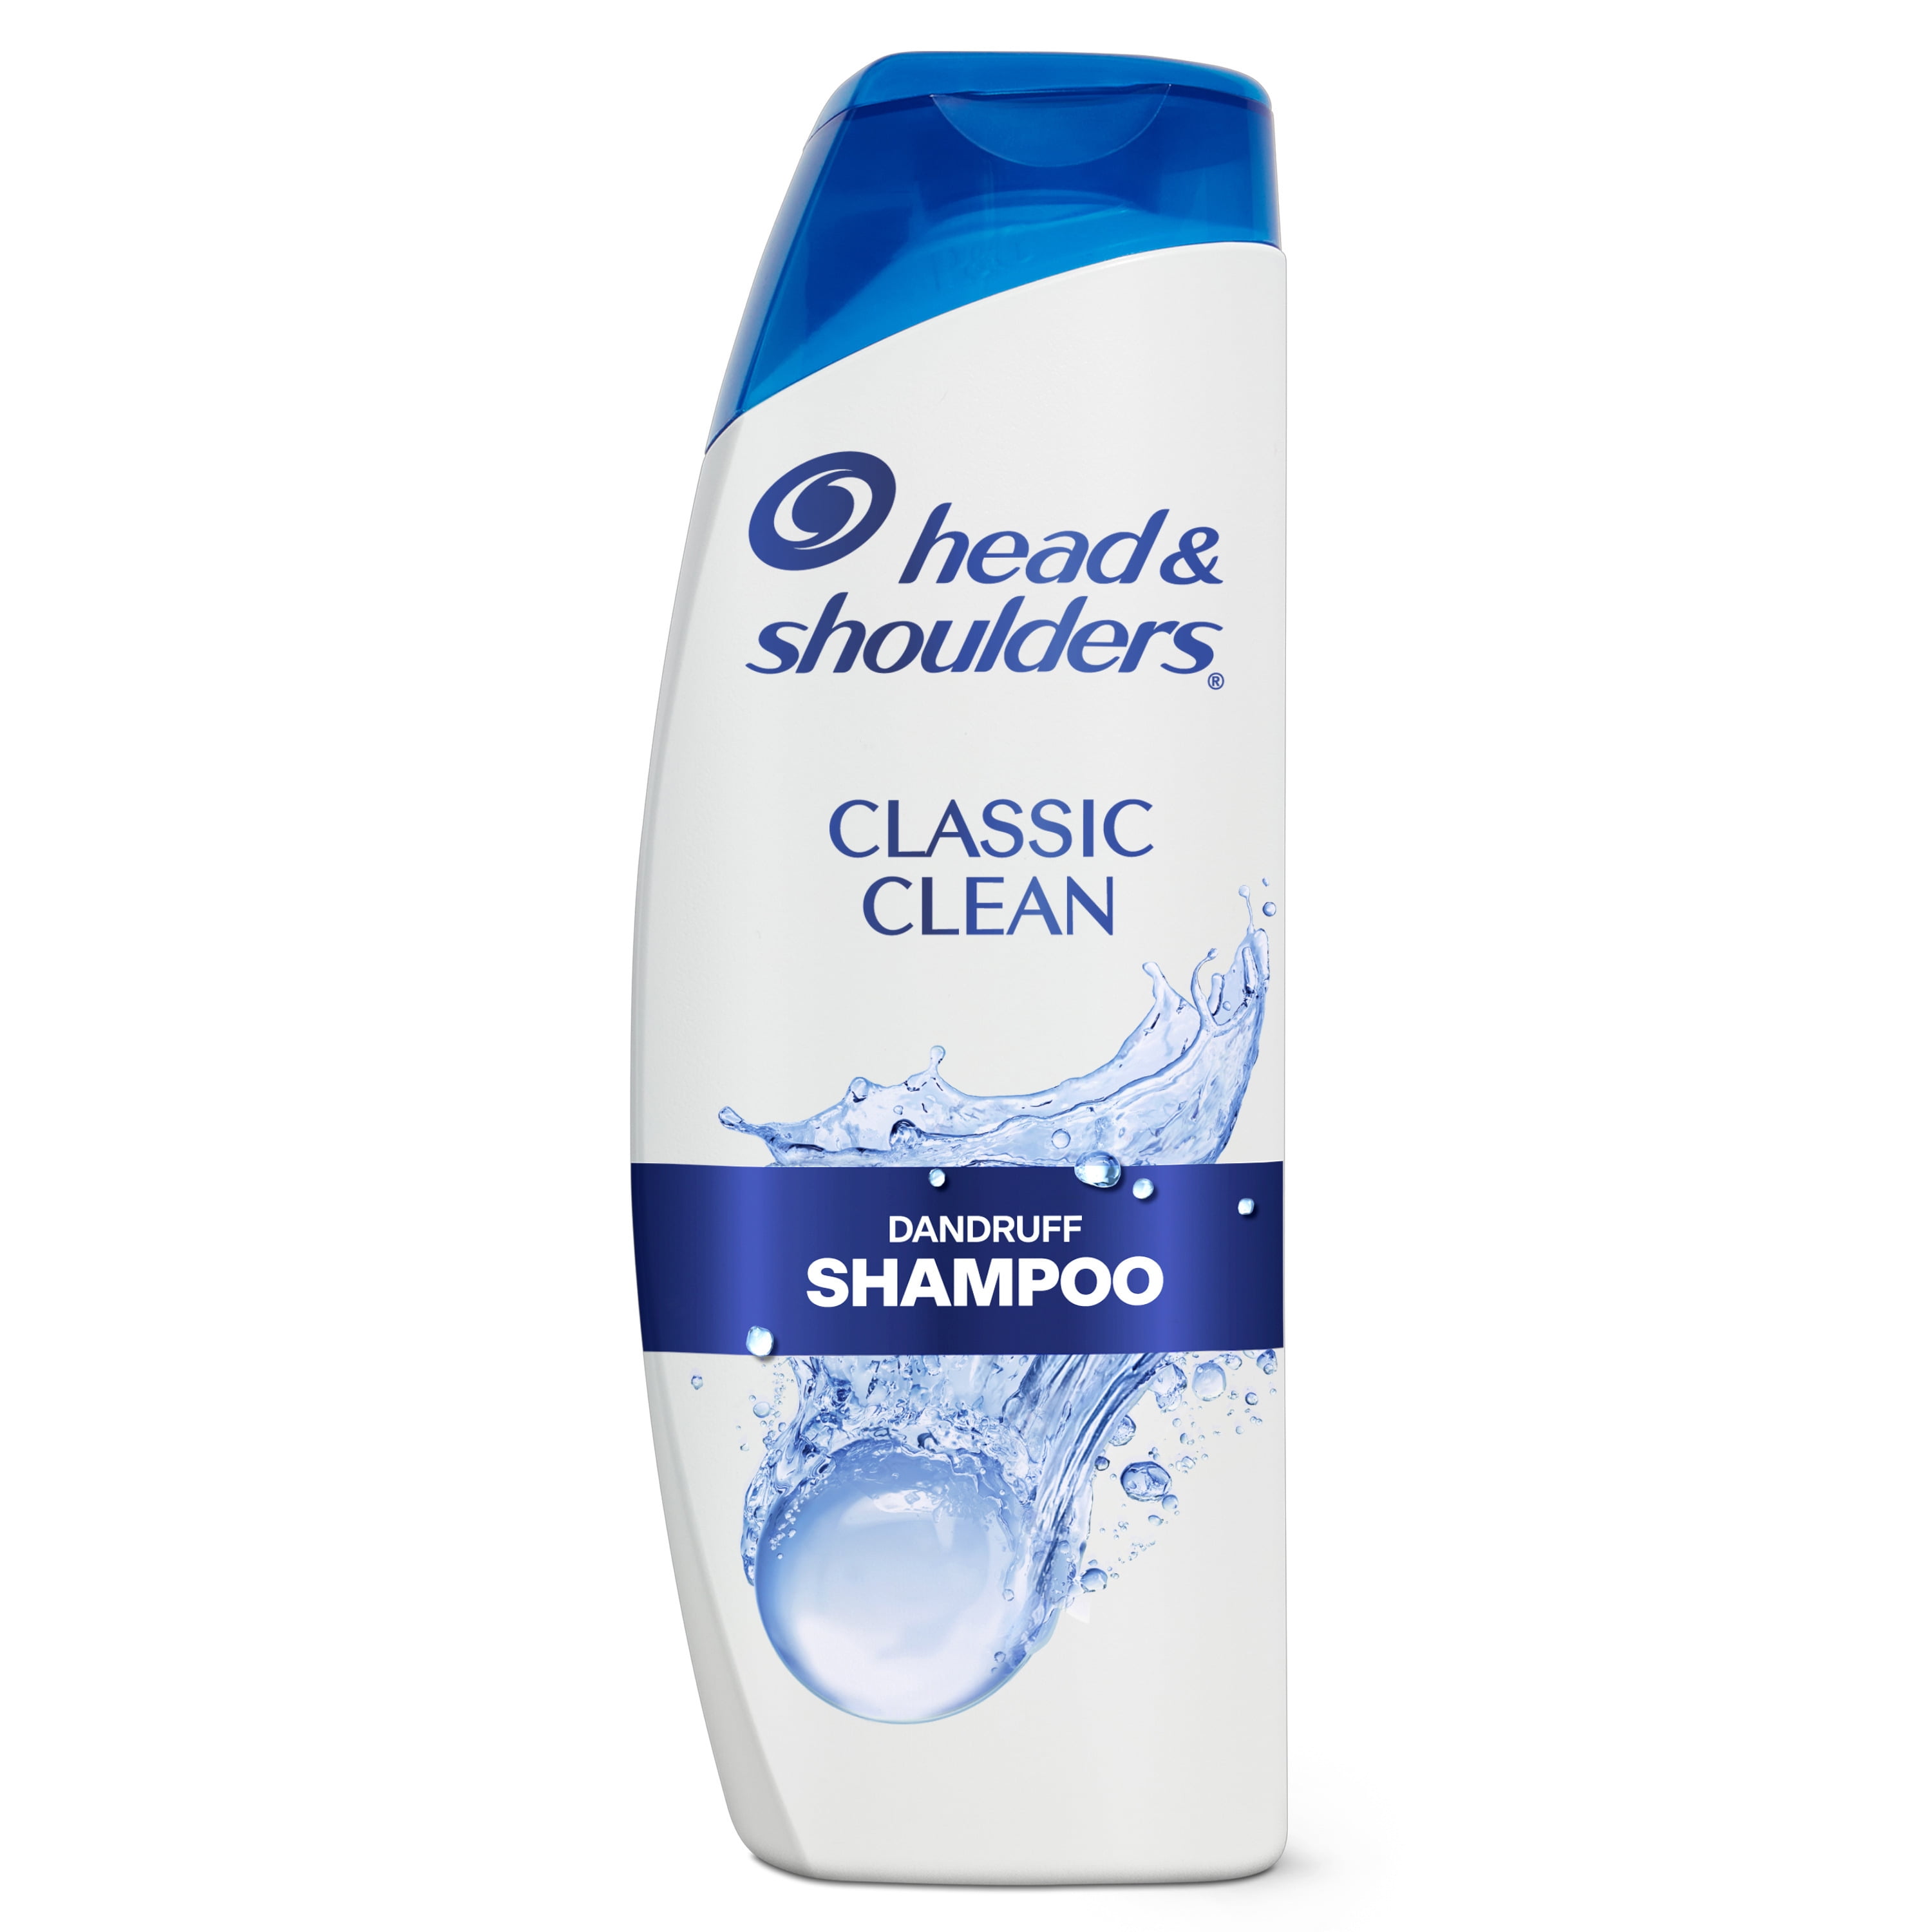 Andrew Halliday træk uld over øjnene Kyst Head and Shoulders Dandruff Shampoo, Classic Clean, 12.5 oz - Walmart.com